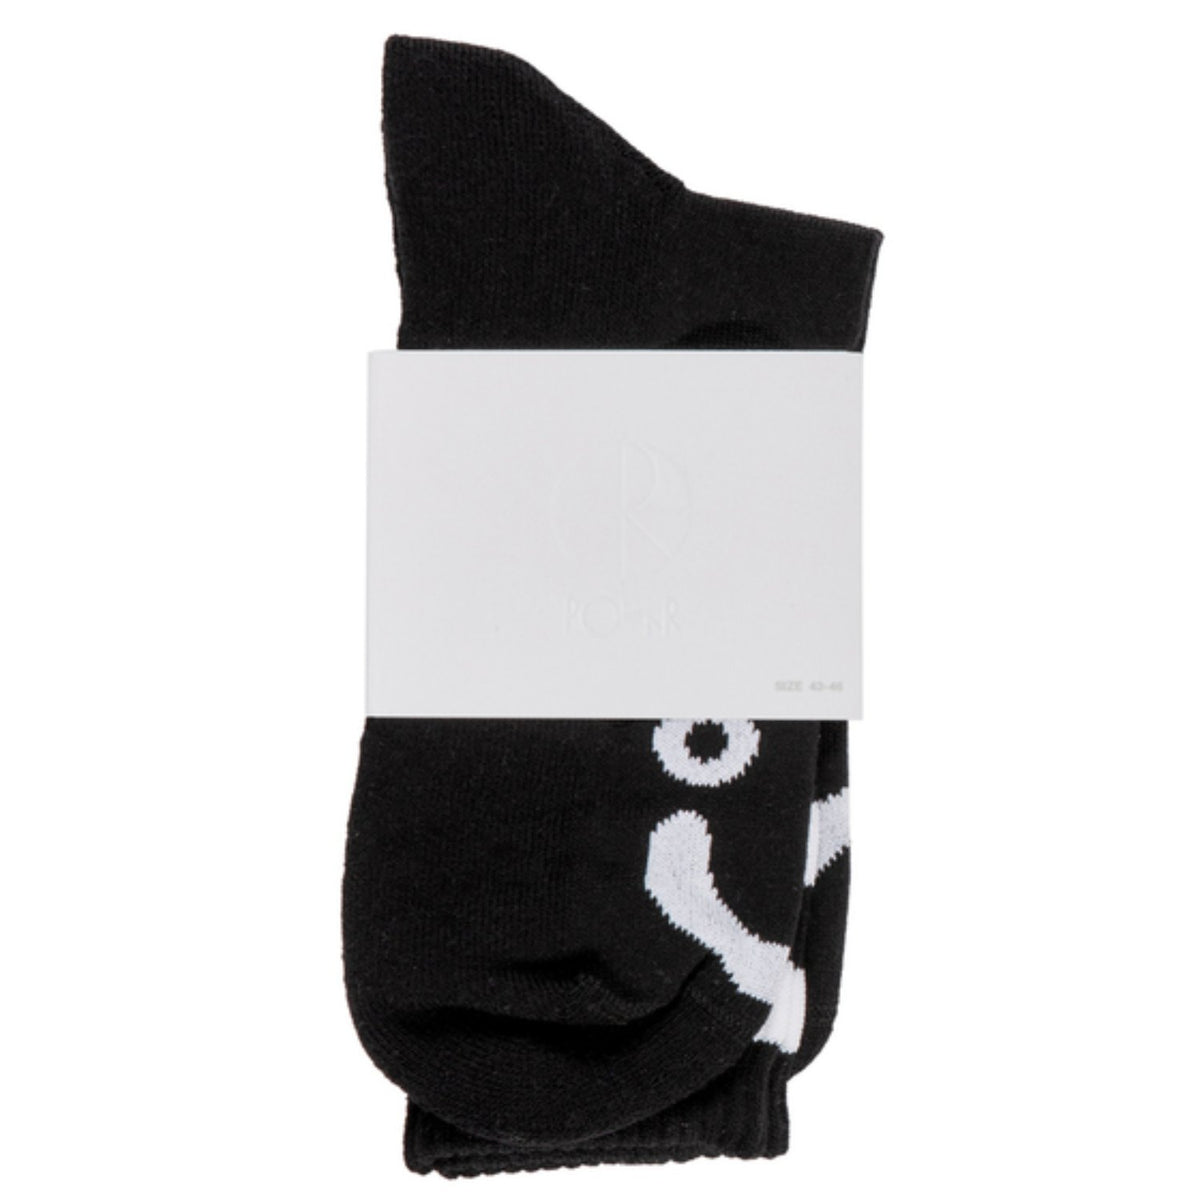 Polar - Happy Sad Socks - Black - Size 35-38